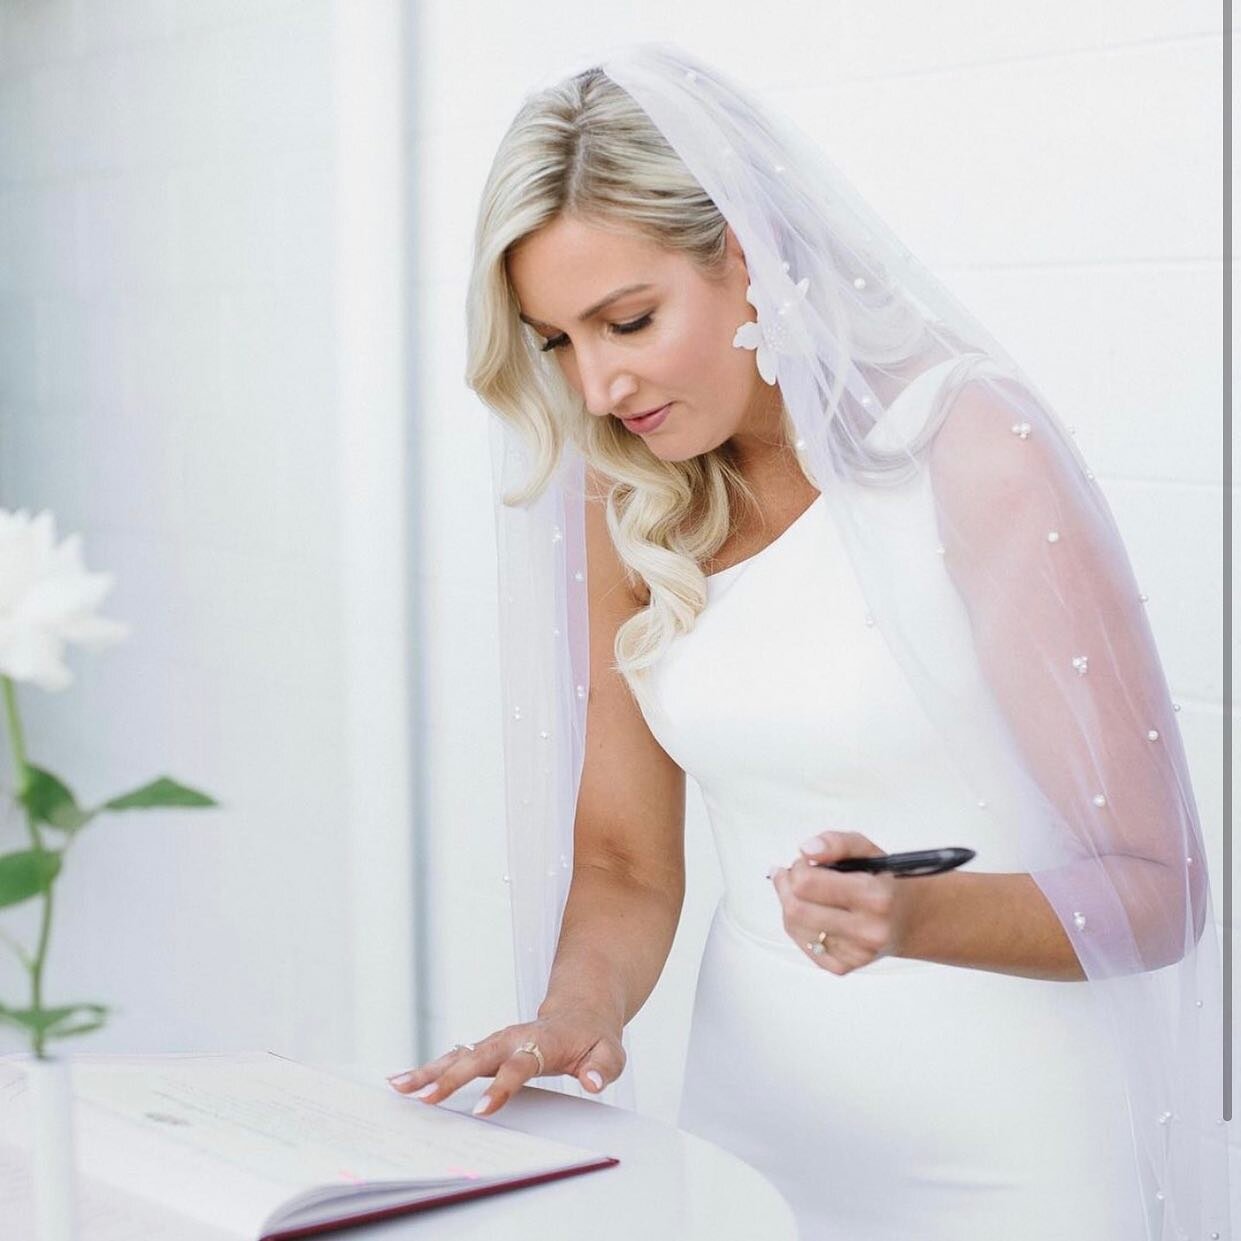 The Perfect Bride 👰&zwj;♀️ 

@itsellastella 
@cloudnineoz